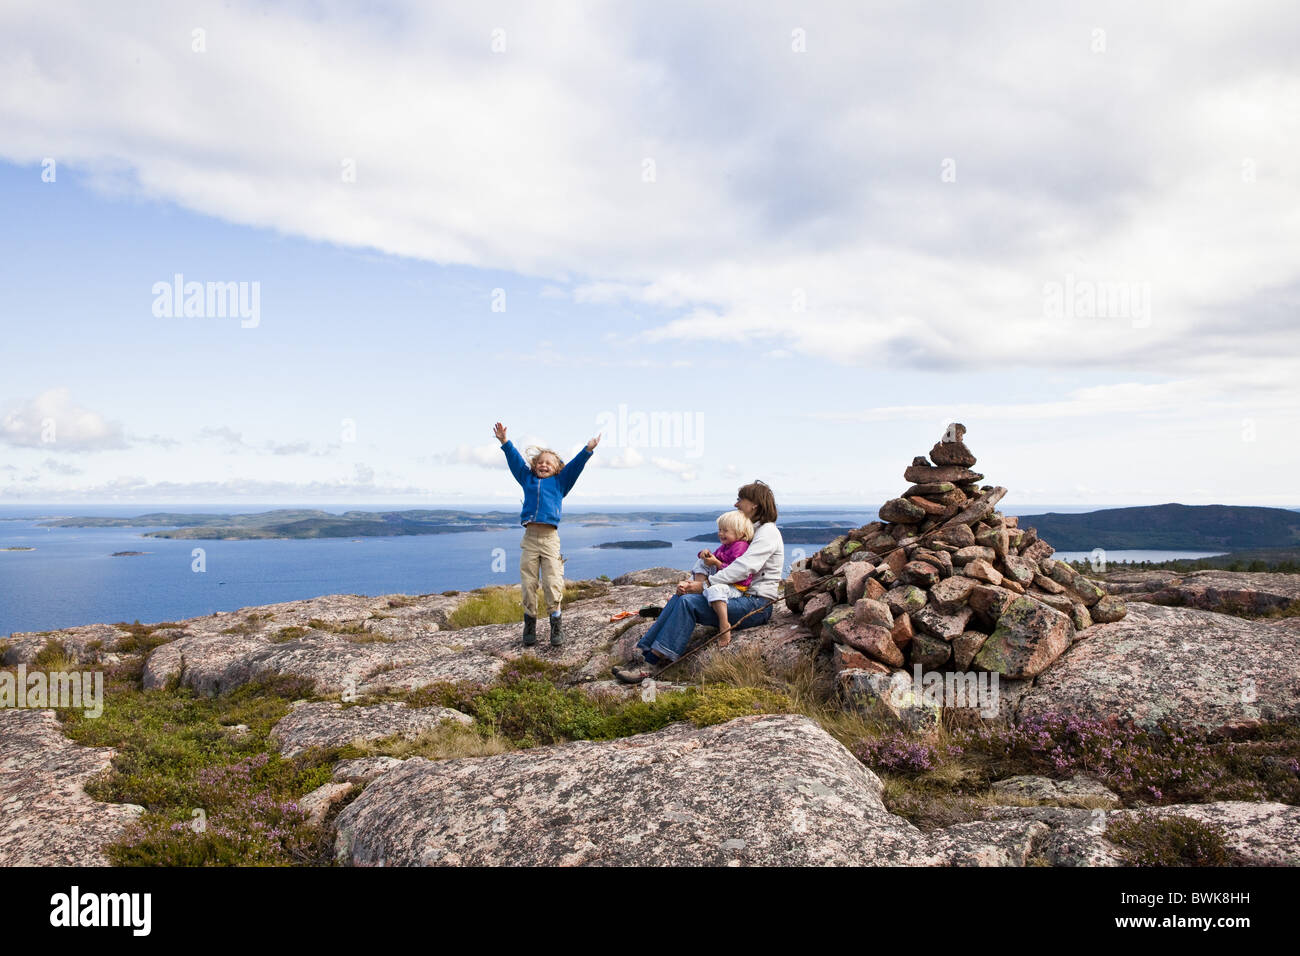 A woman and two girls on rocks at the national park Skuleskogen, Hoega Kusten, Vaesternorrland, Sweden, Europe Stock Photo